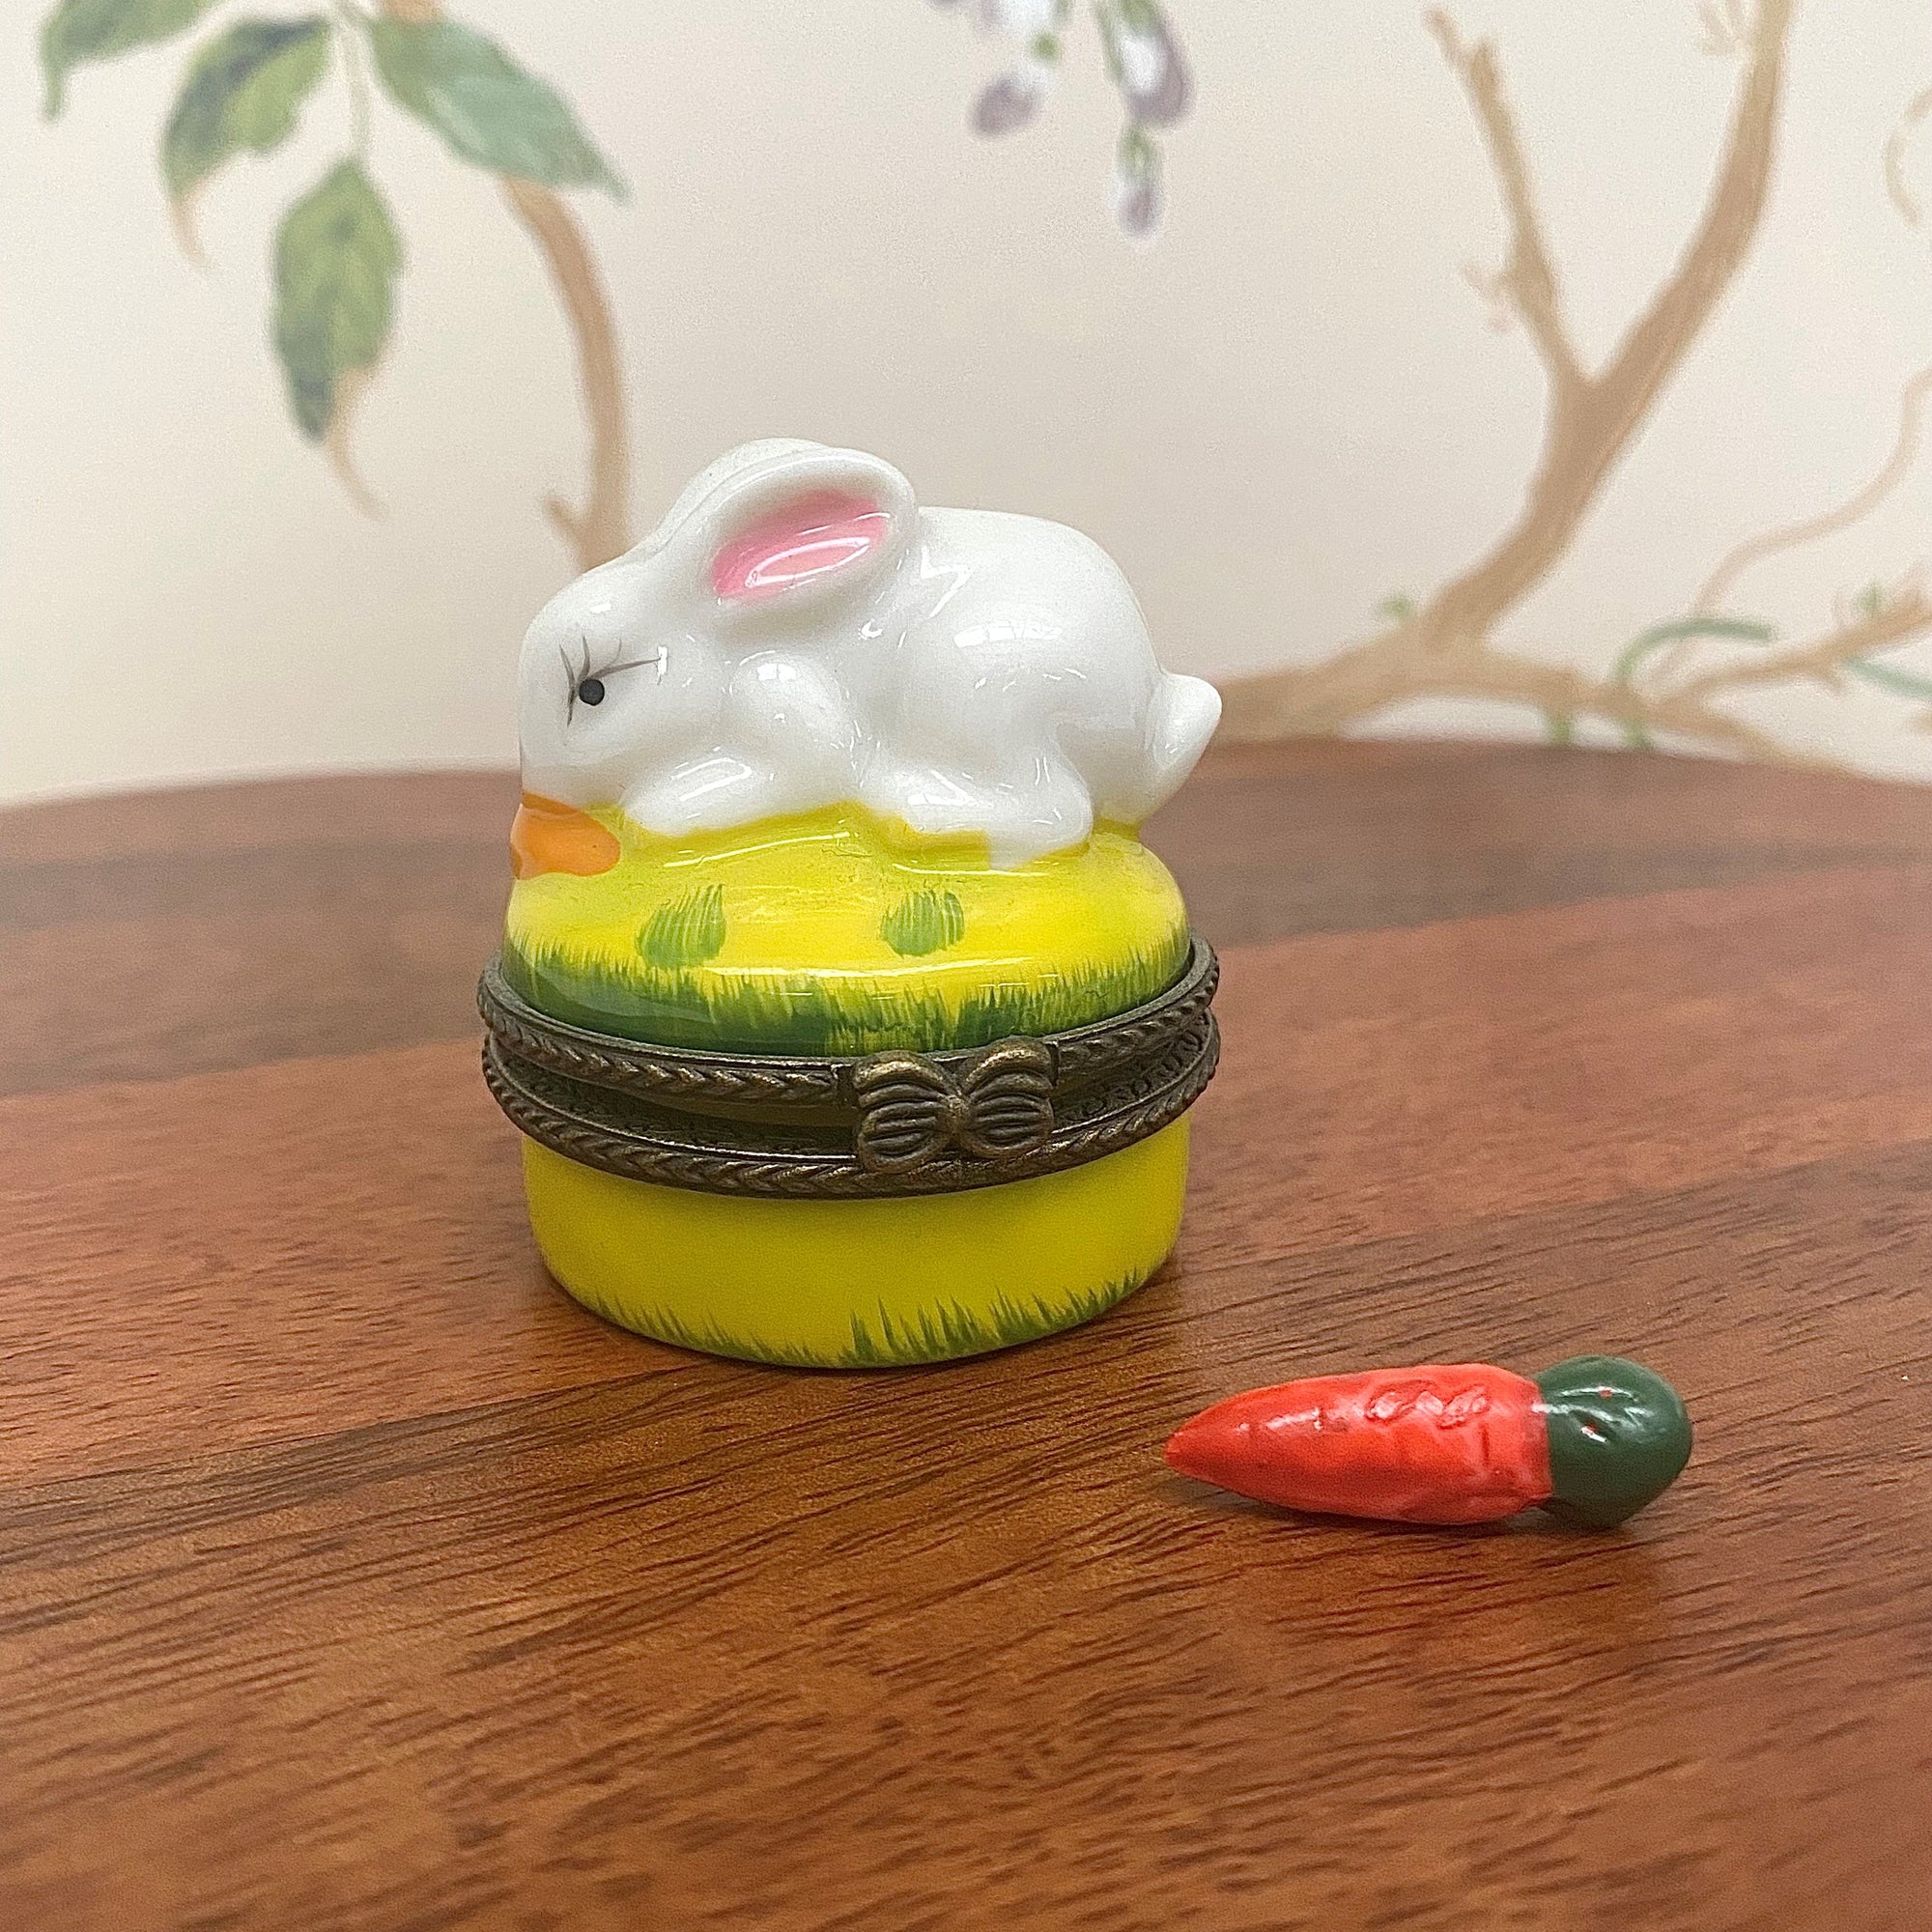 Rabbit ceramic box with hidden carrot trinket